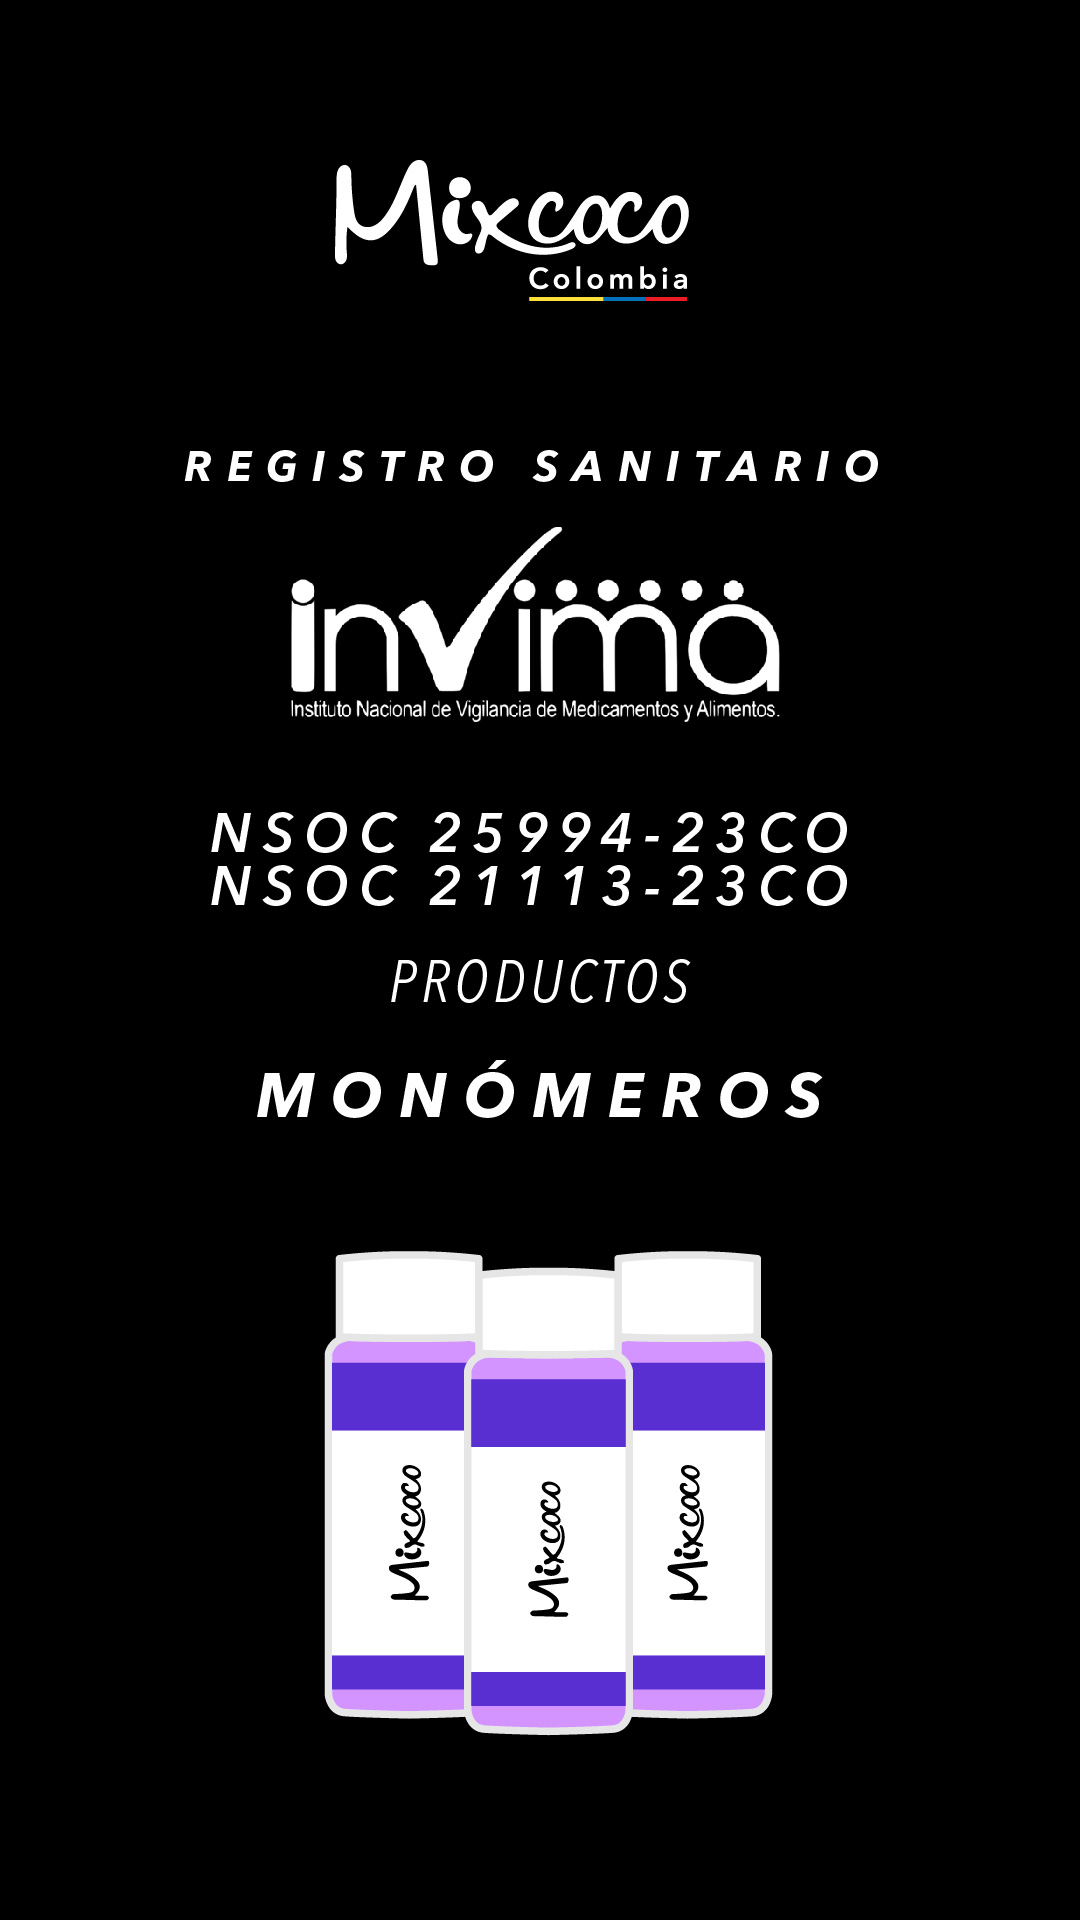 INVIMA_MONOMEROS-MIXCOCO